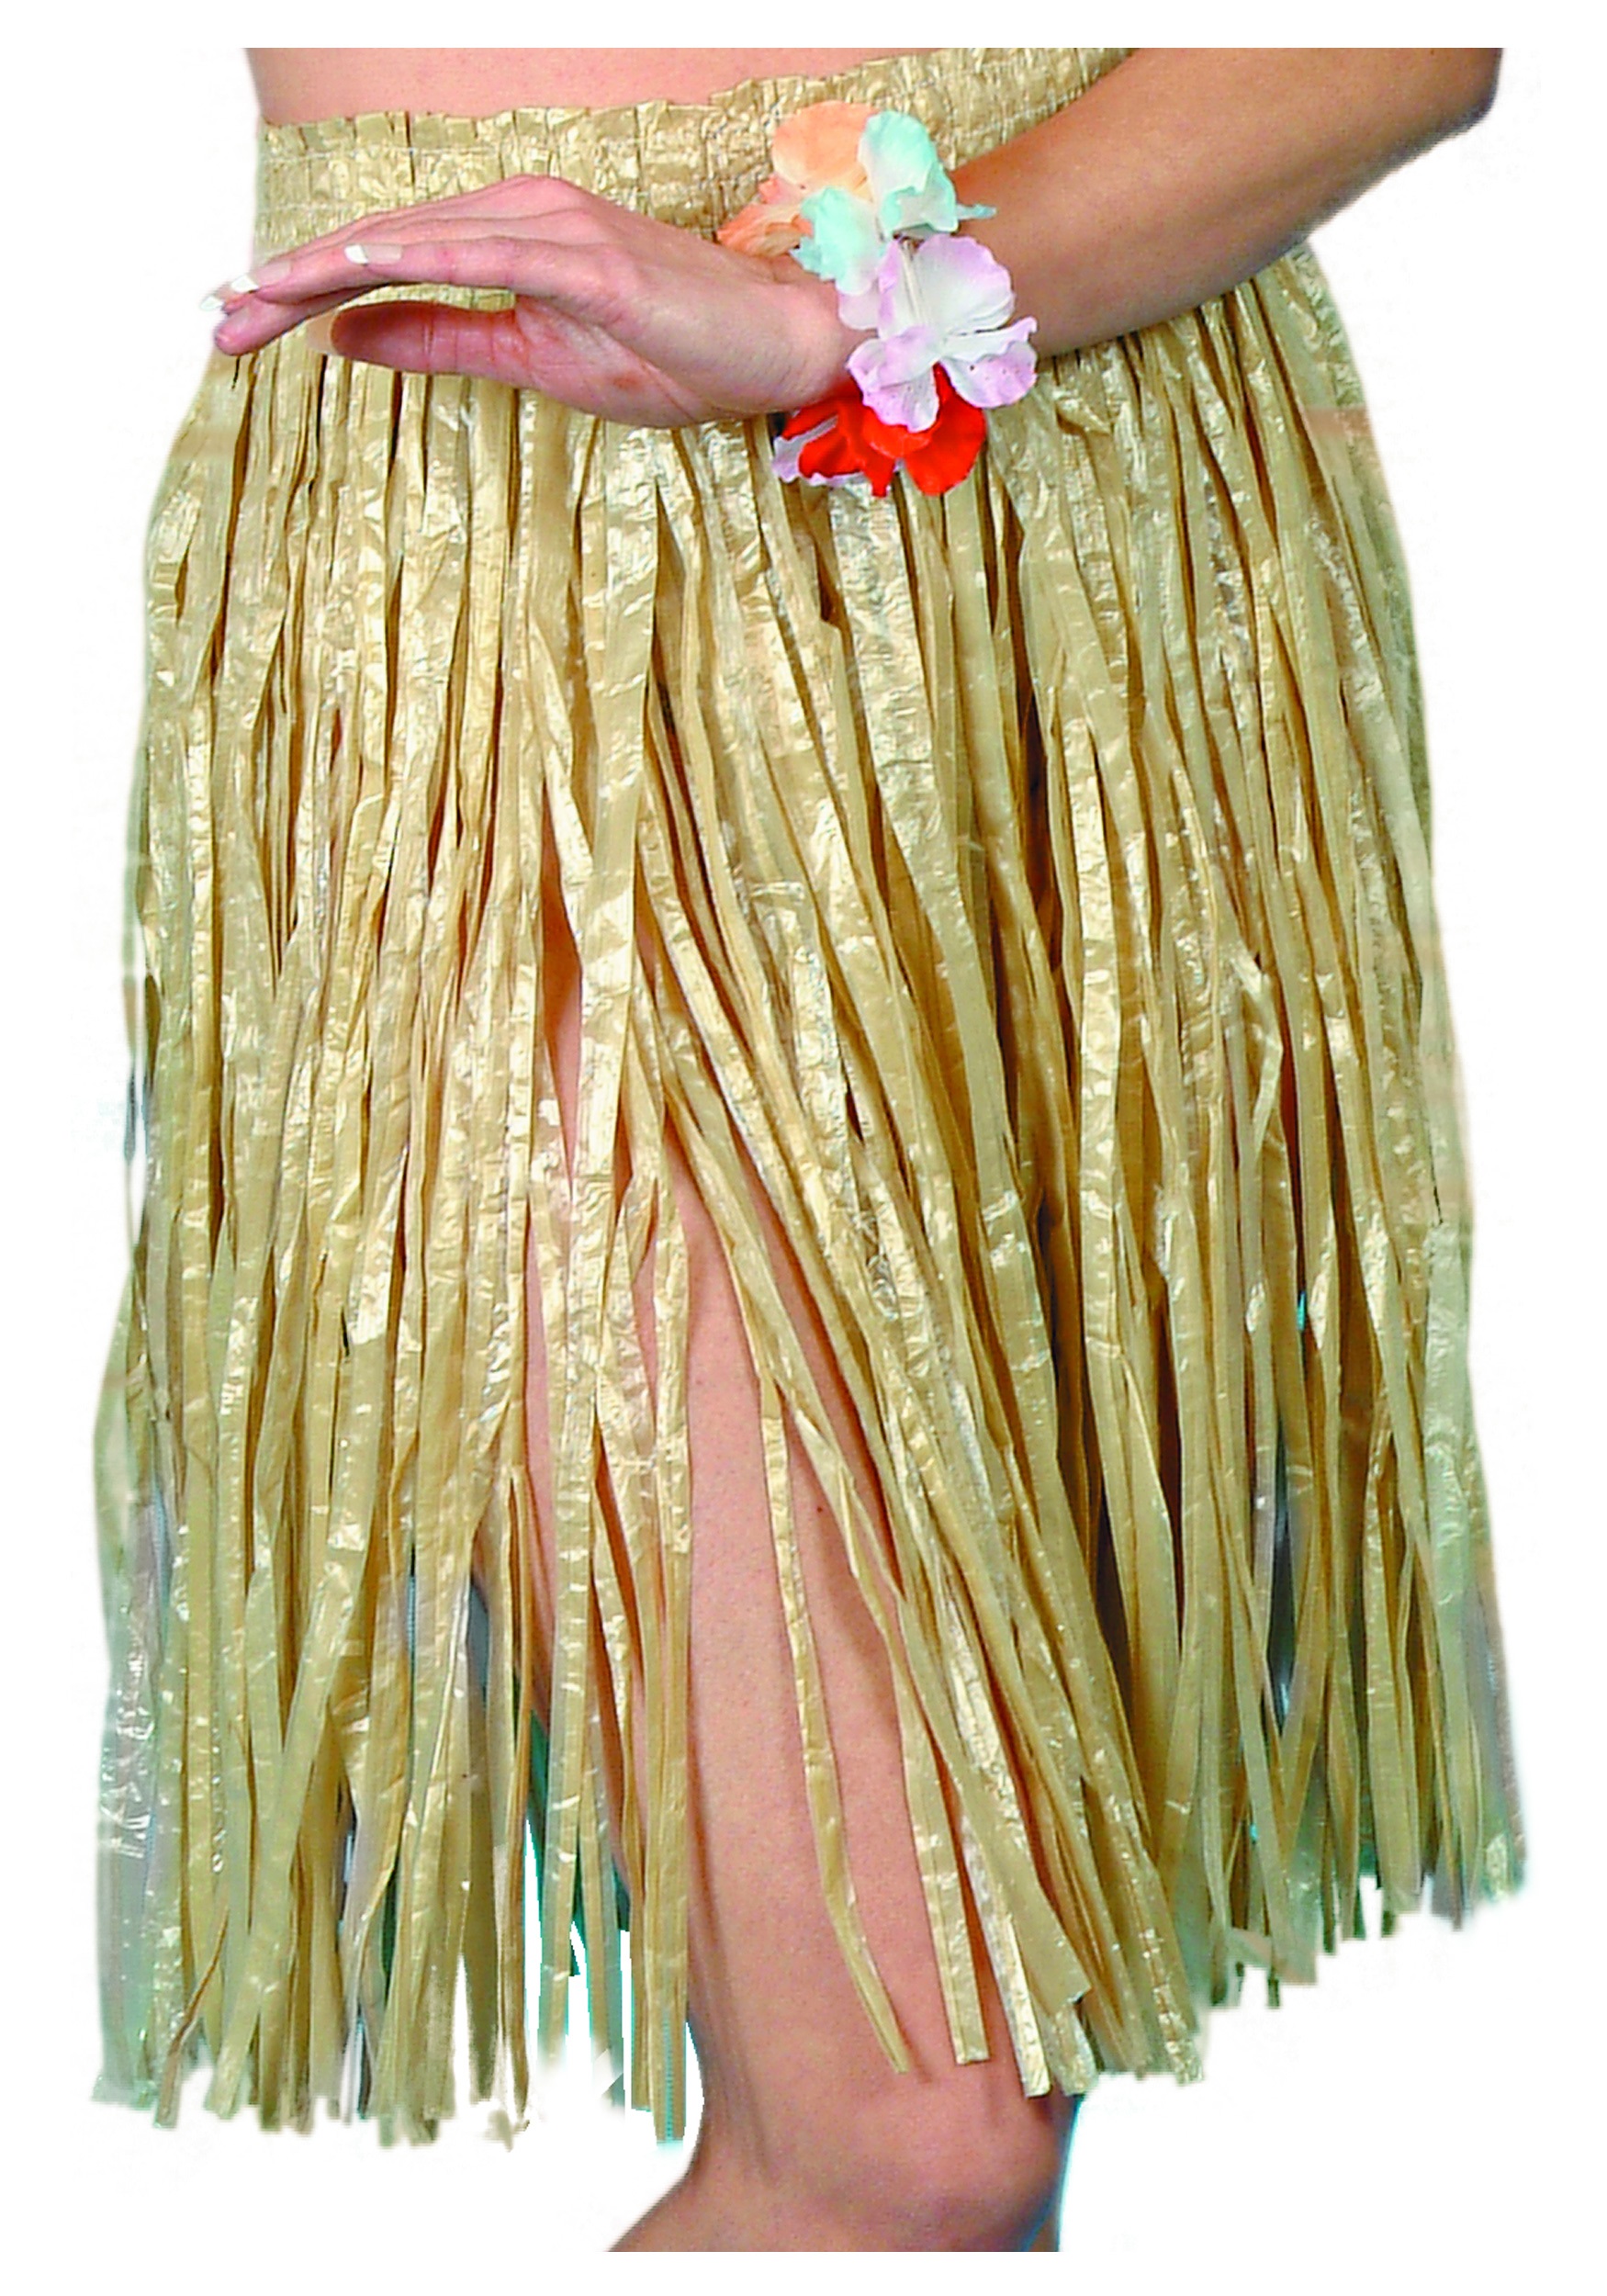 https://images.halloweencostumes.com/products/10132/1-1/hawaiian-hula-skirt.jpg